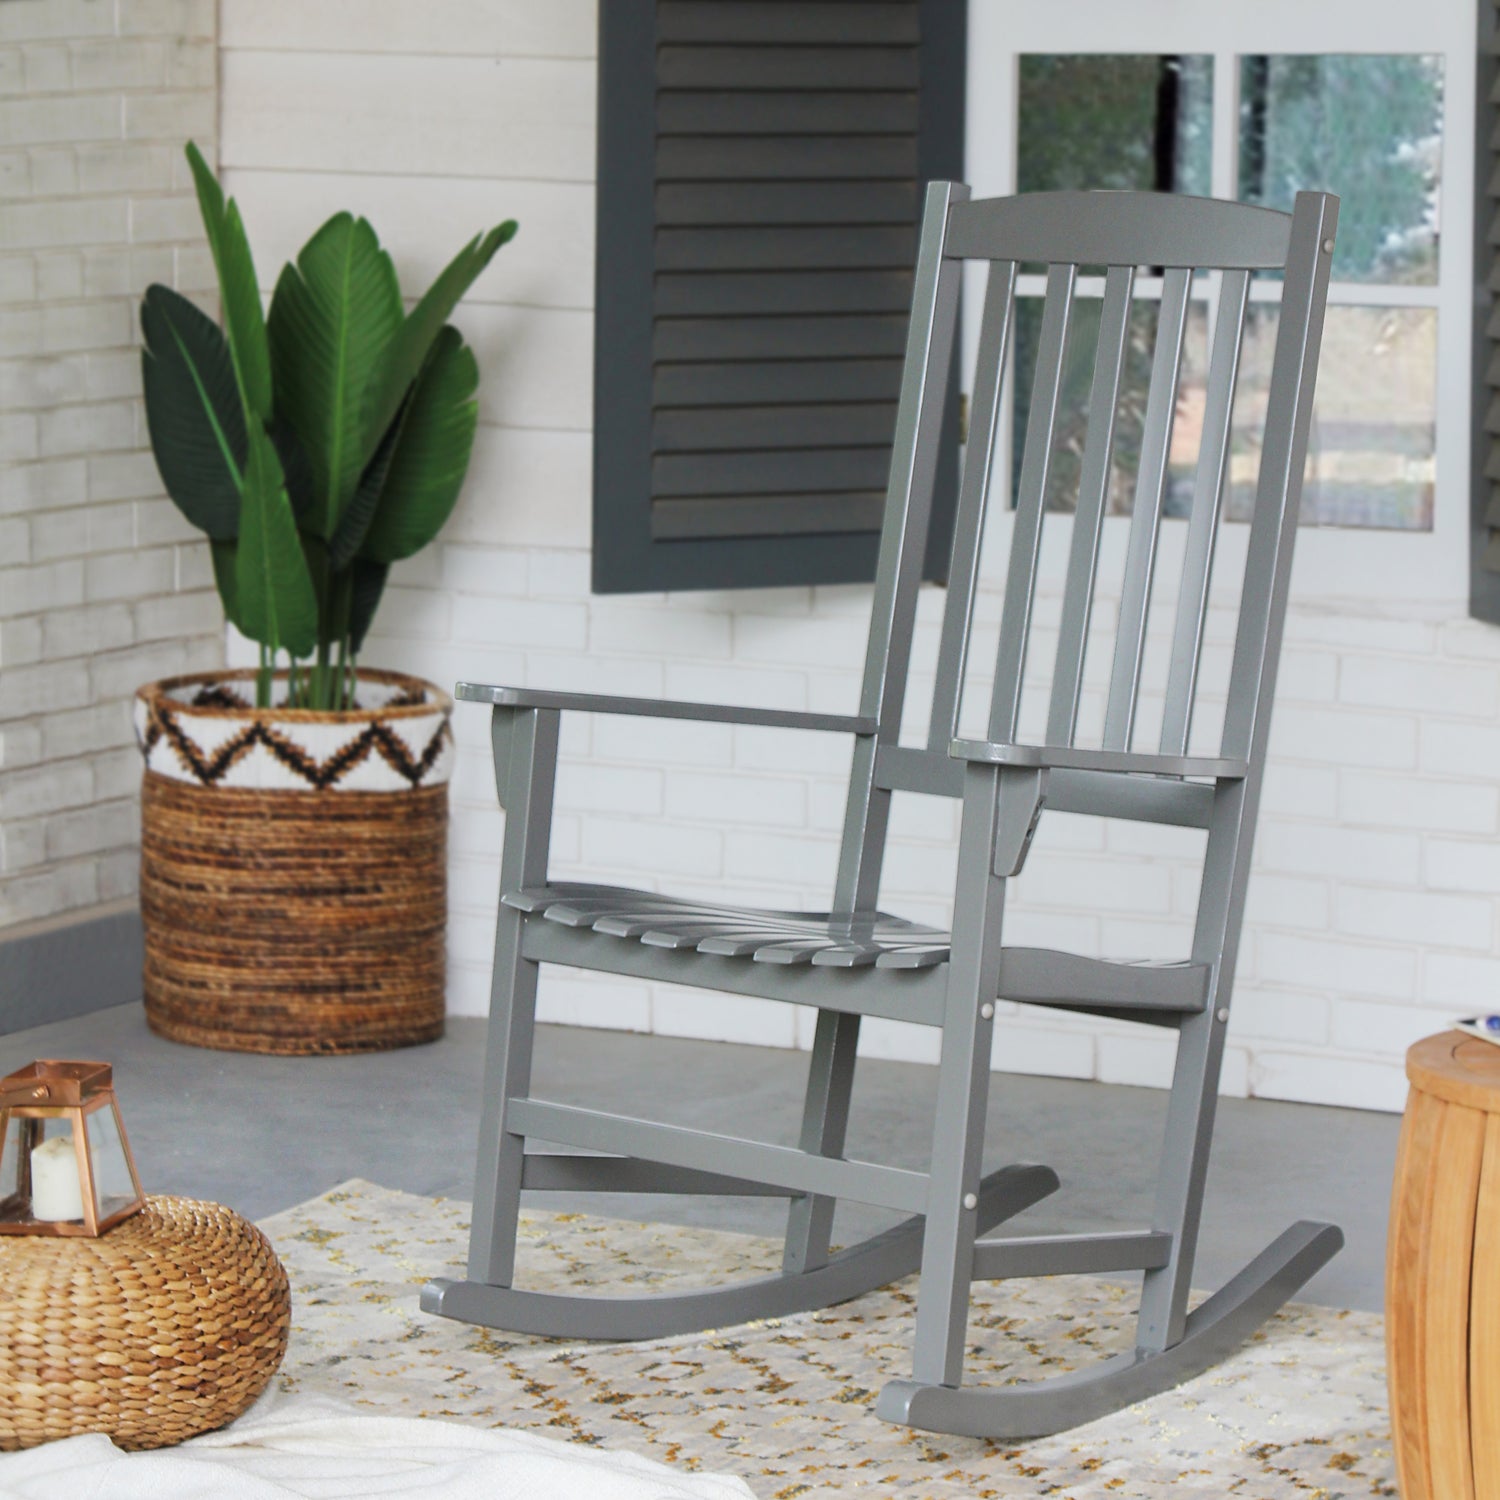 Moni Mahogany Wood Slate Gray Porch Rocking Chair (Set of 2) - Cambridge Casual